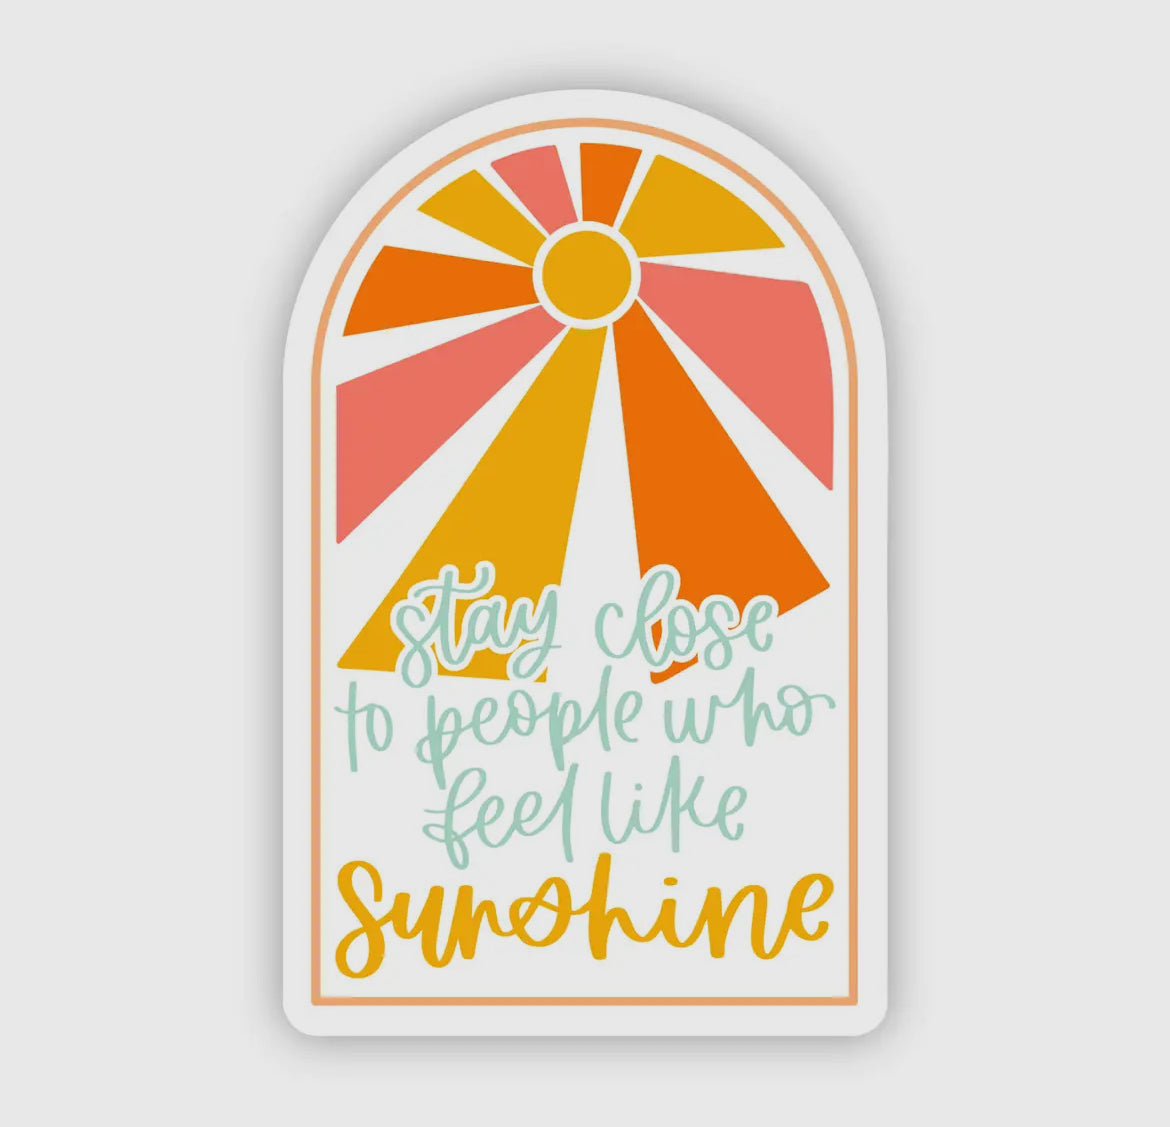 Stay Close To People Who Feel Like Sunshine Sticker